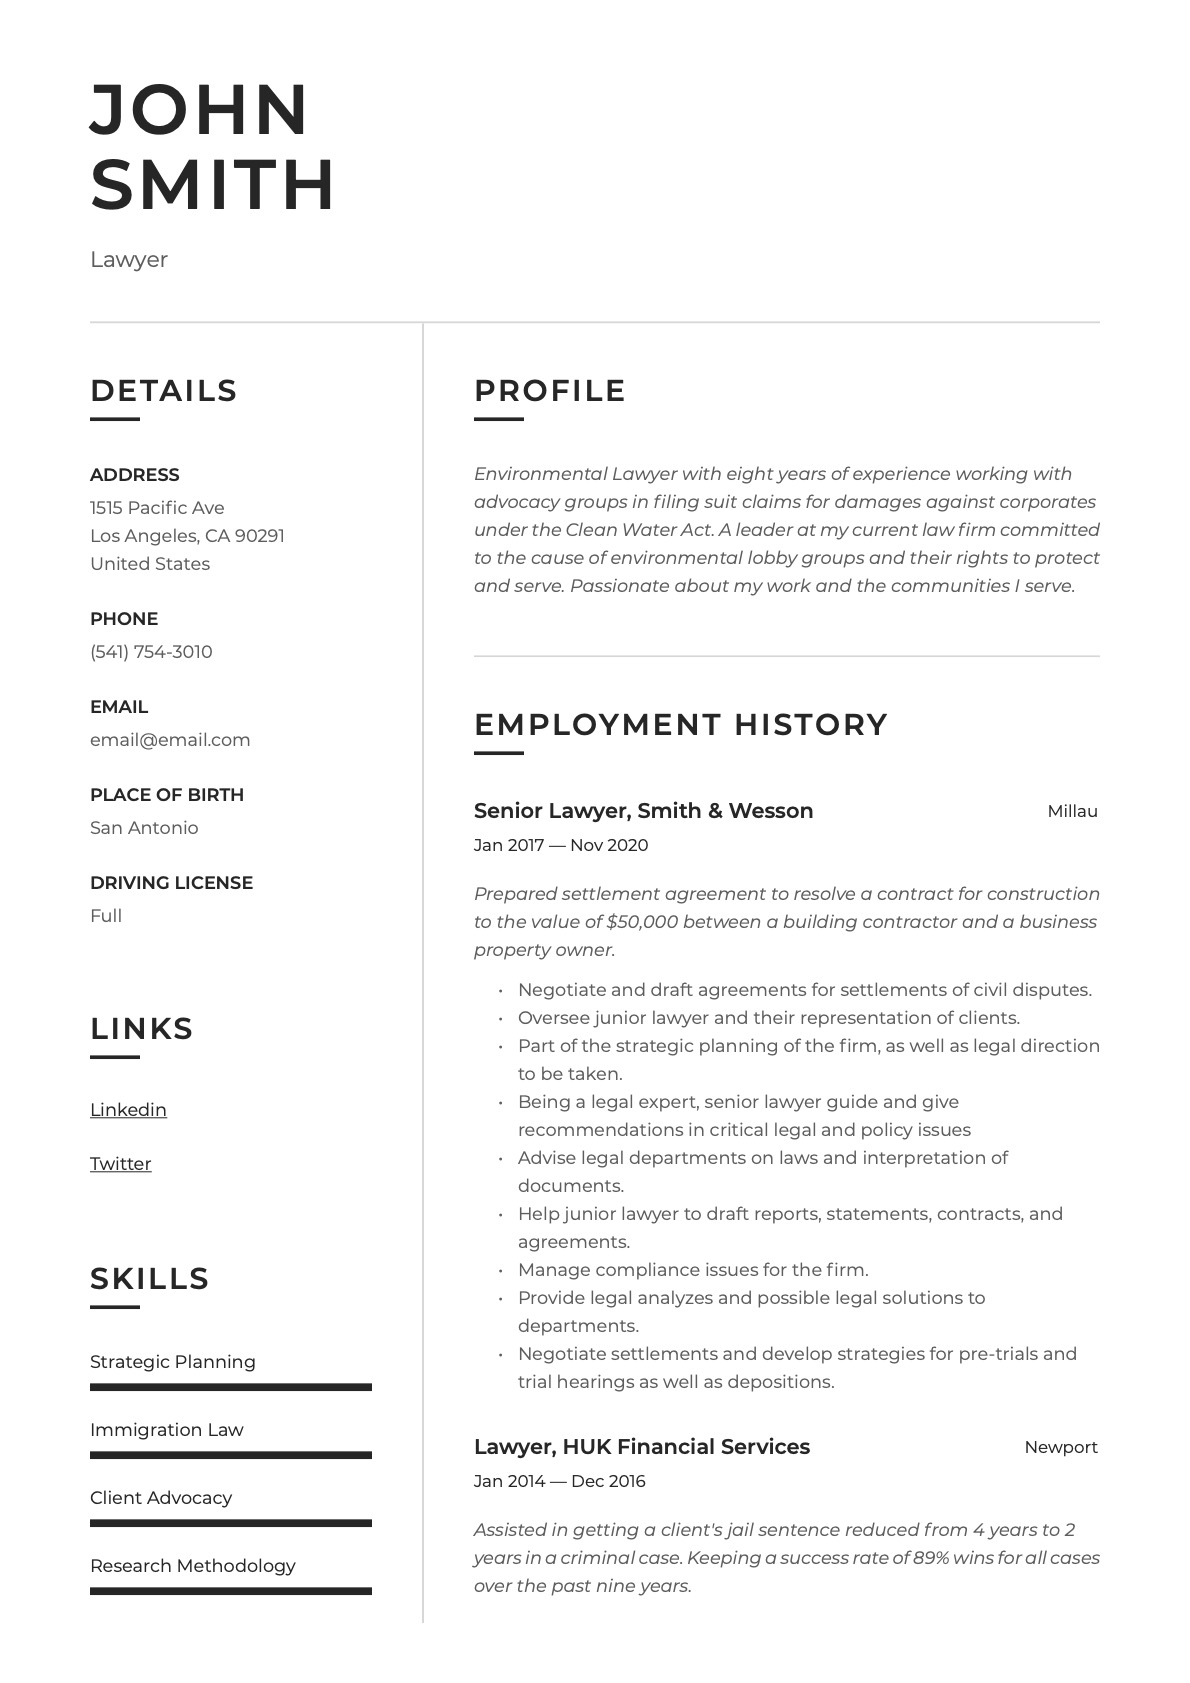 Example resume Lawyer-14